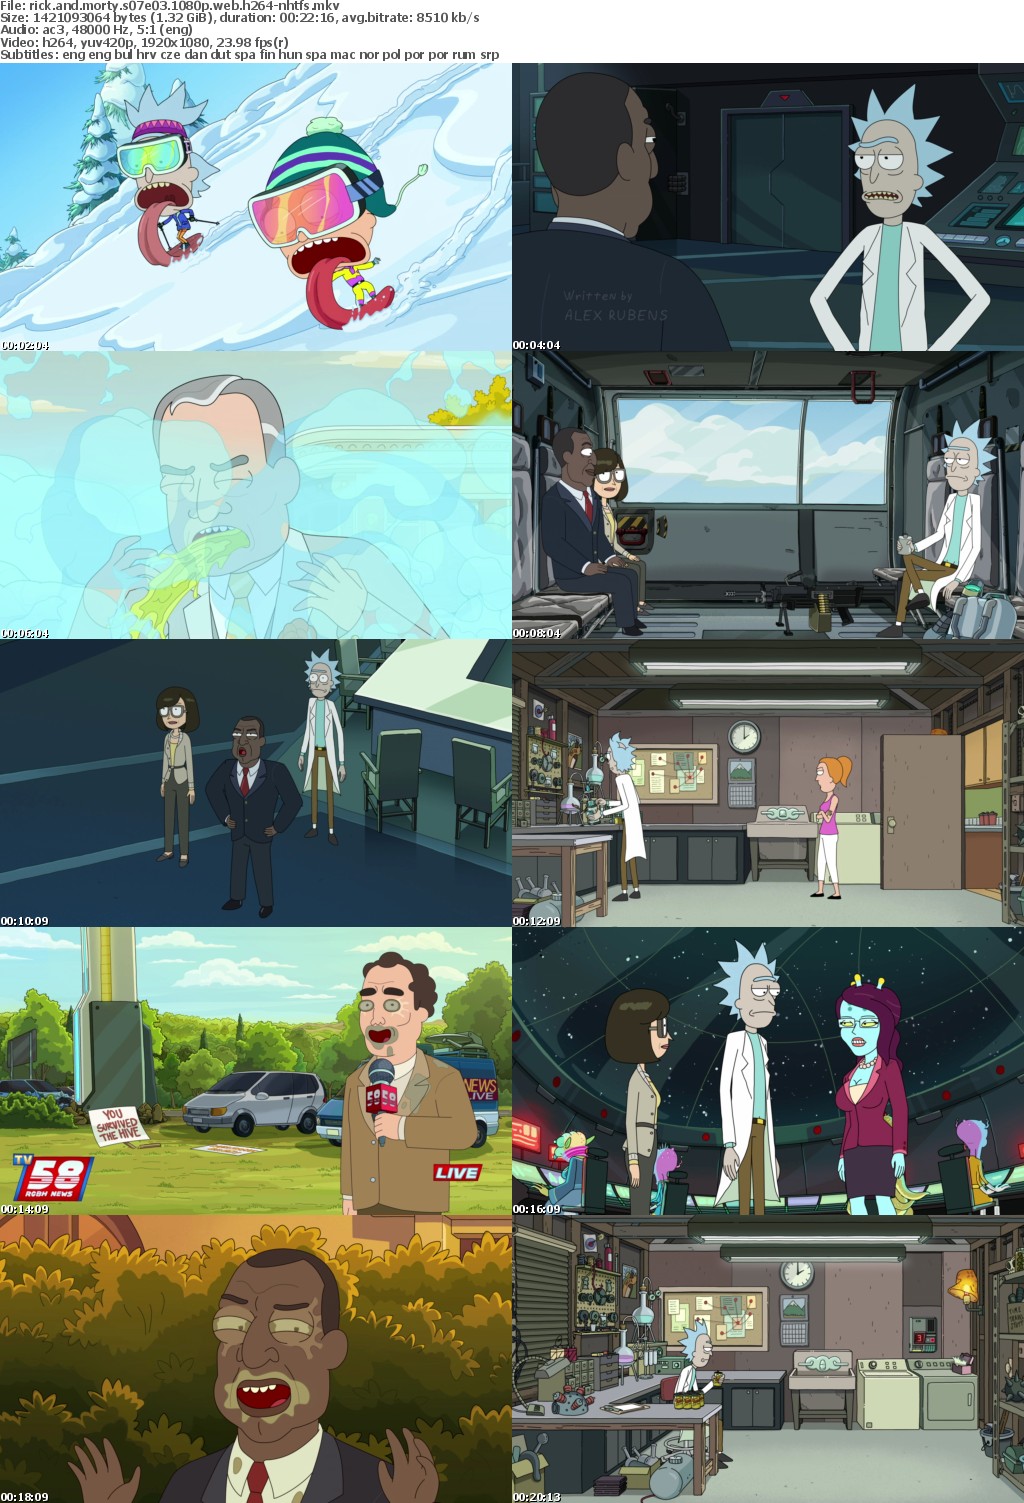 Rick and Morty S07E03 1080p WEB H264-NHTFS